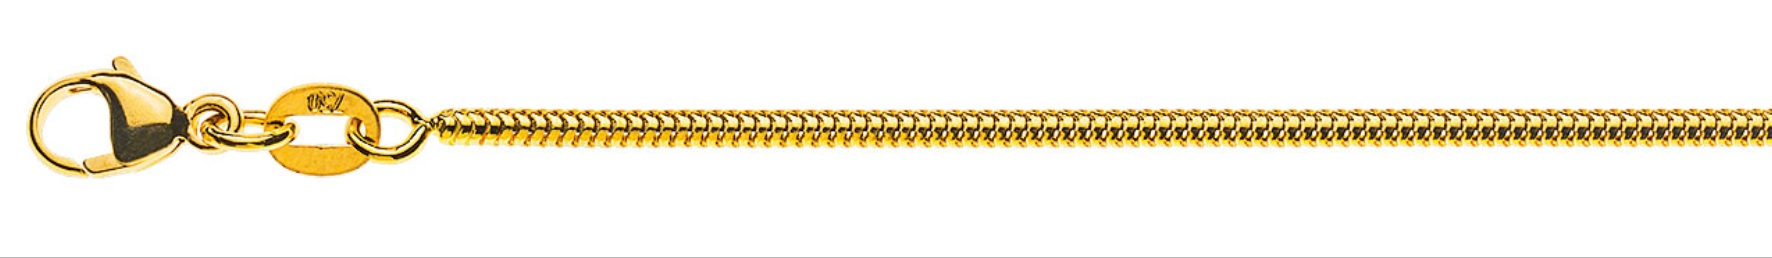 AURONOS Prestige Collier en or jaune 18K serpent 50cm 1.6mm